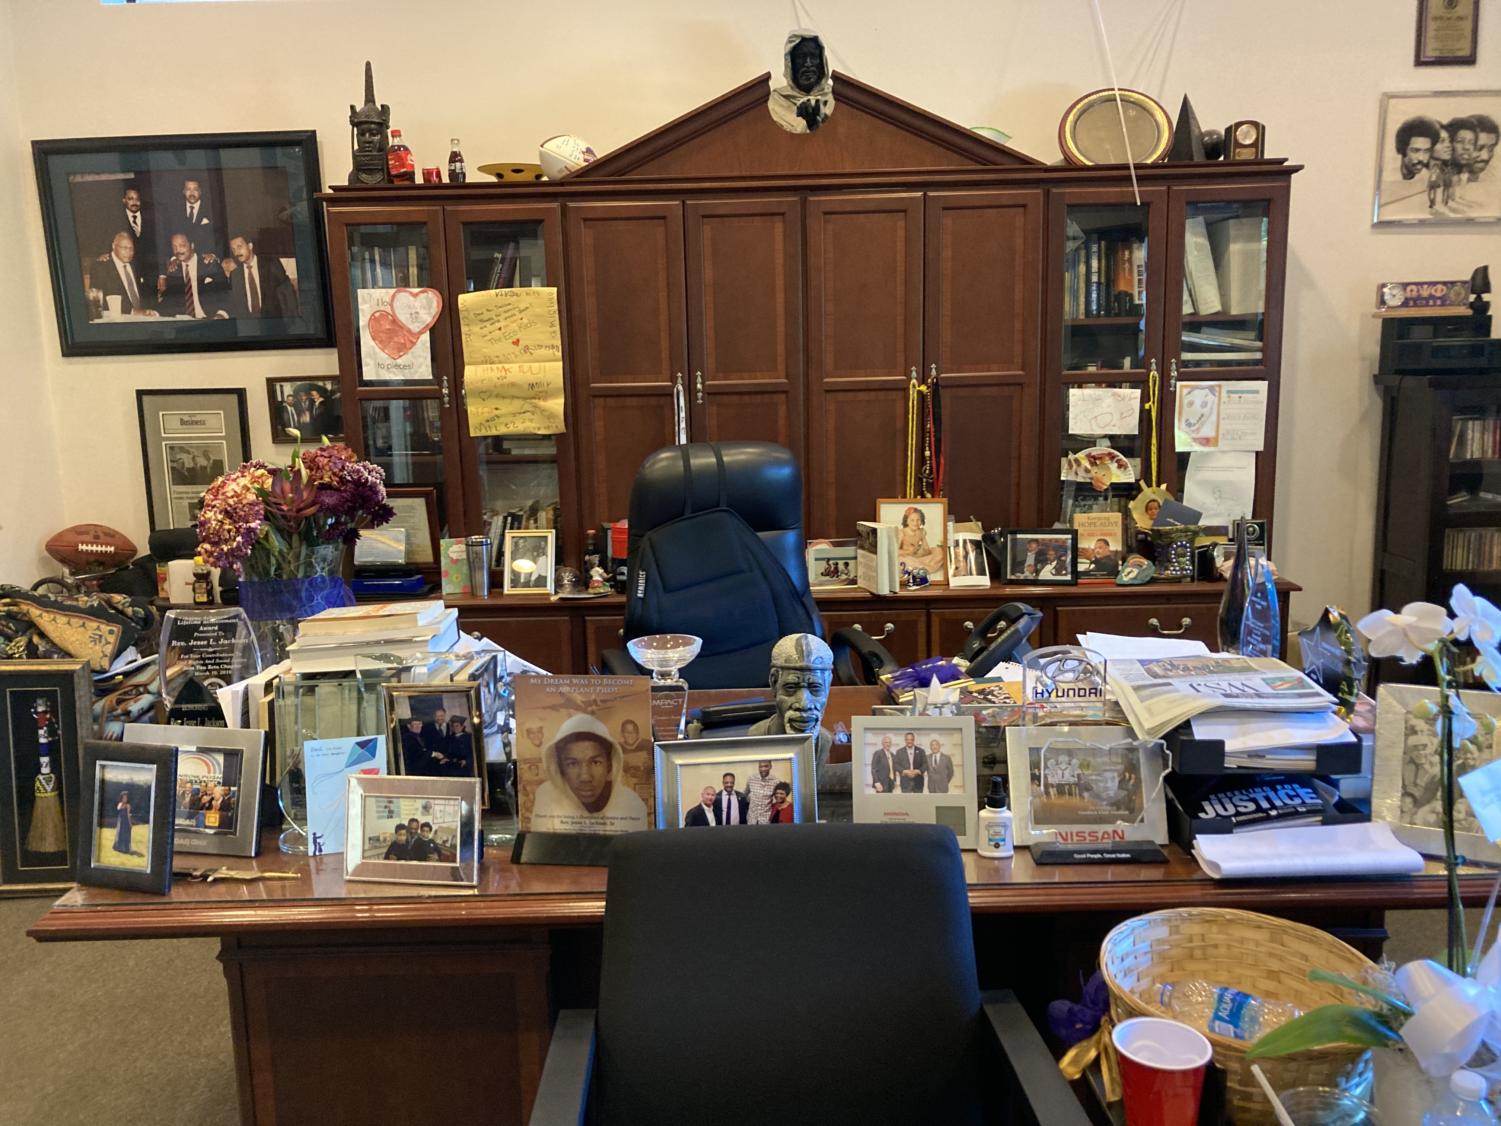 Jackson’s desk at Rainbow PUSH headquarters.